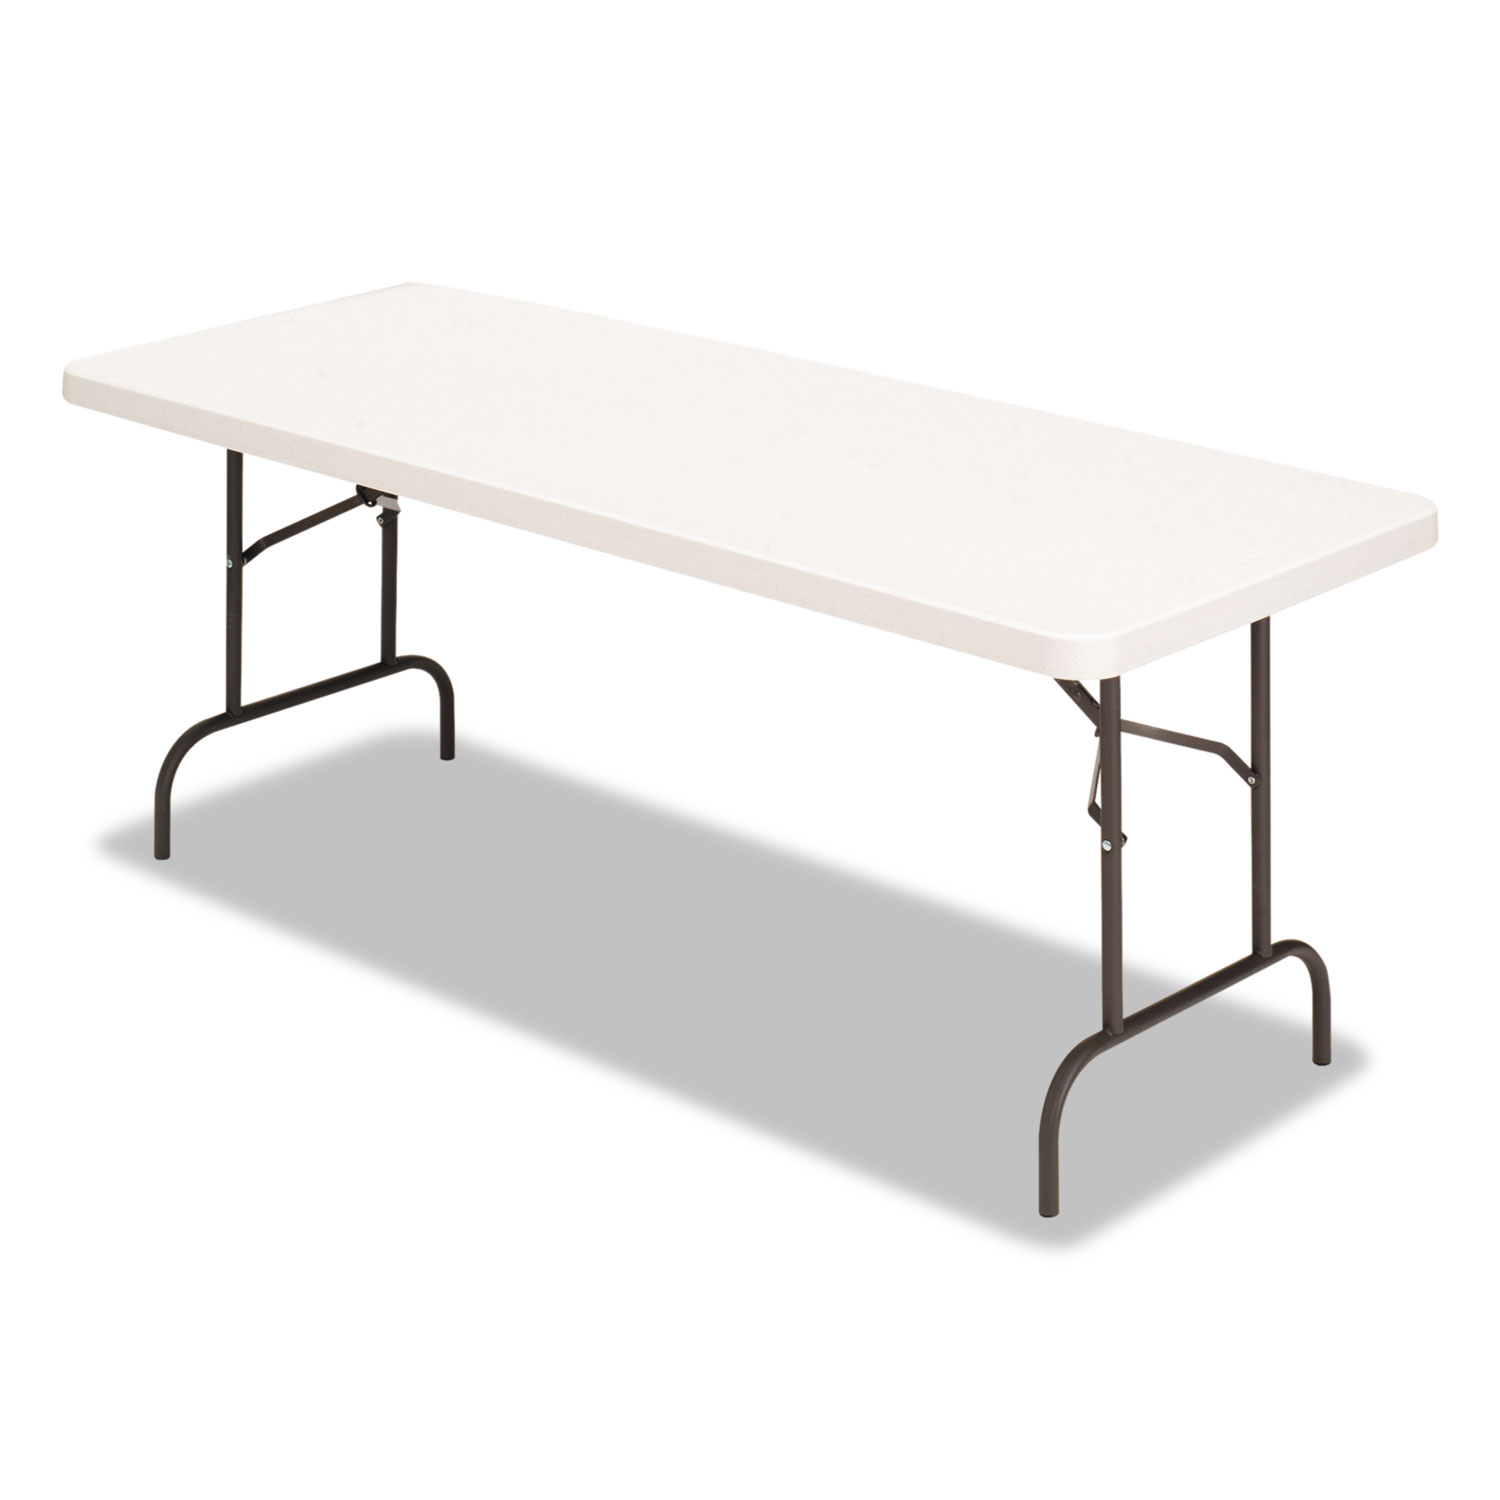  Alera 65602 Banquet Folding Table, Rectangular, Radius Edge, 60 x 30 x 29, Platinum/Charcoal (ALE65602) 